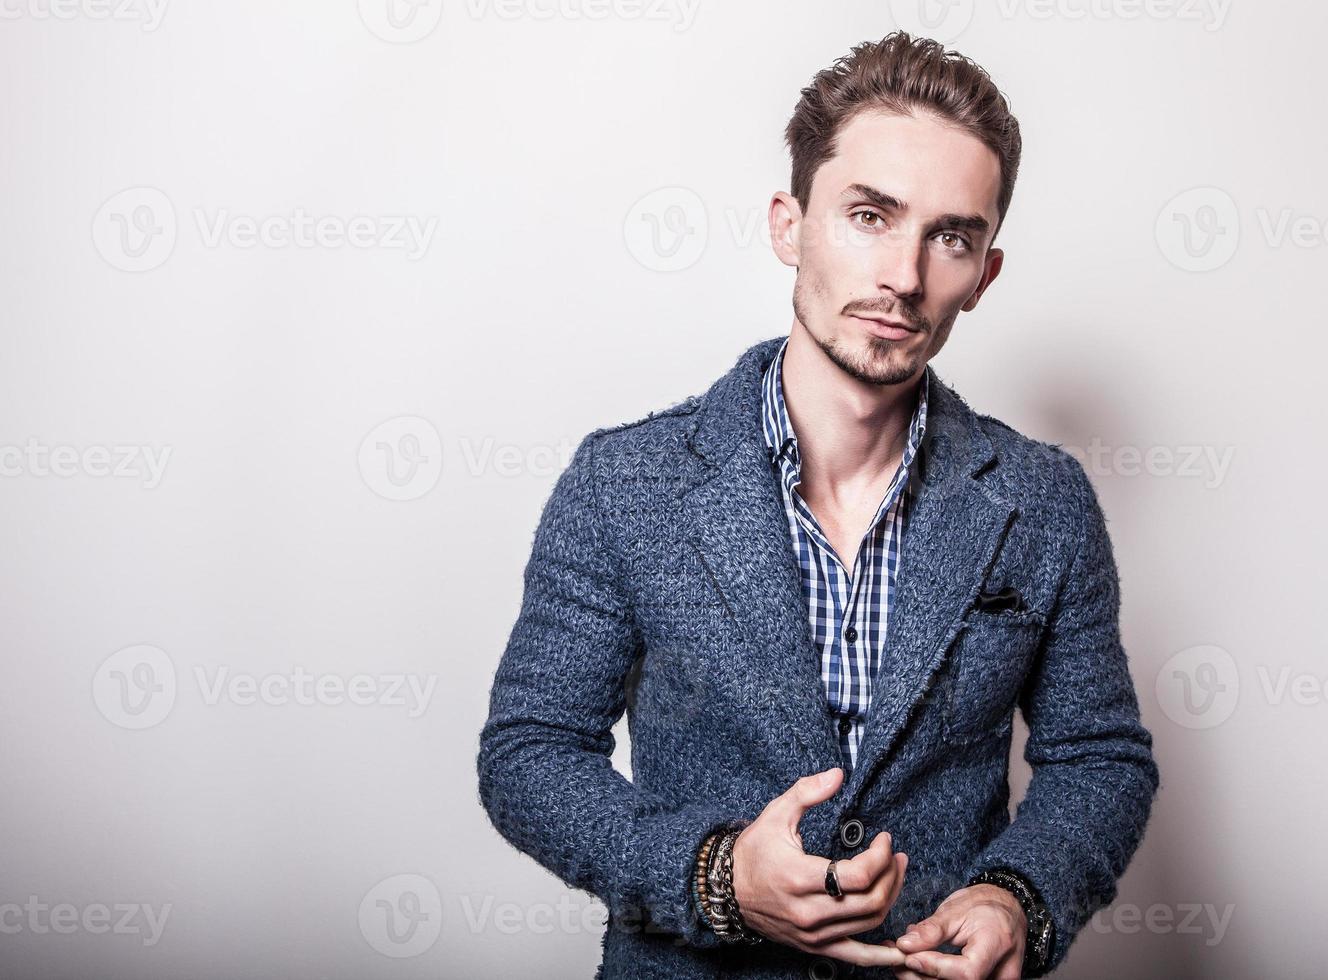 elegante jonge knappe man in stijlvolle blauwe jas. foto